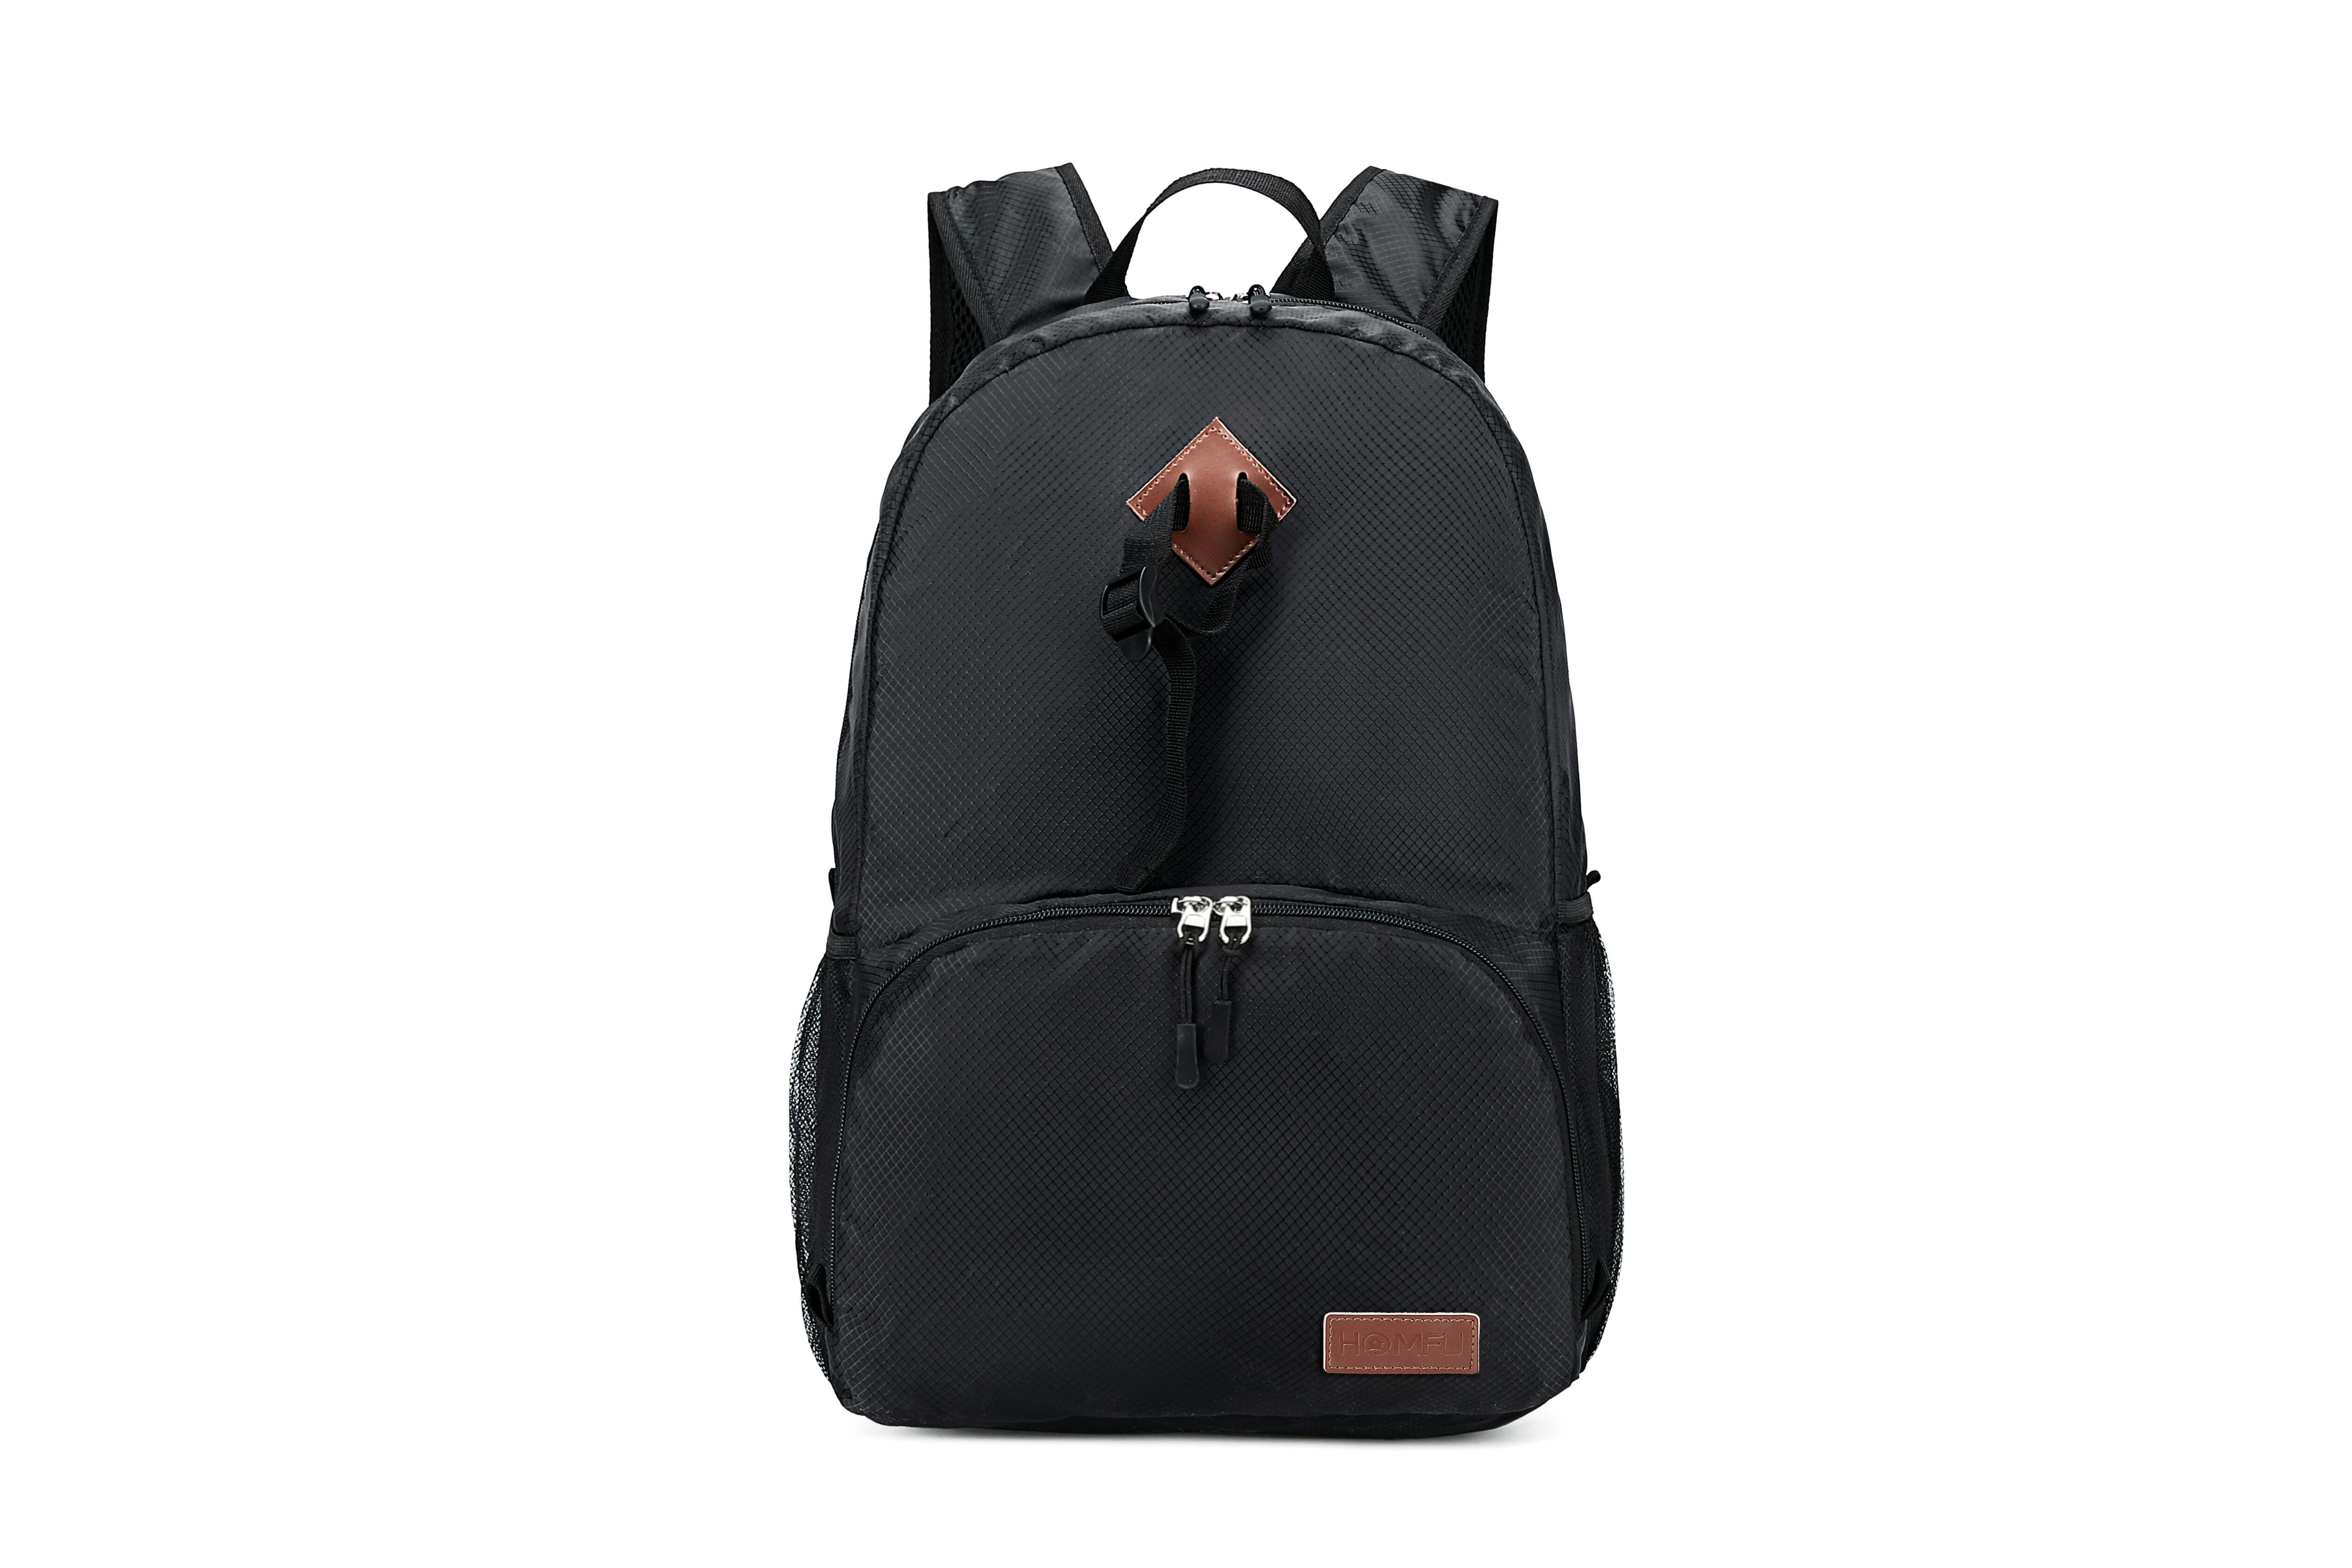 Homfu Foldable Backpack For Travel Packable Daypack For Hiking Camping Waterproof Lightweight Bag Black  